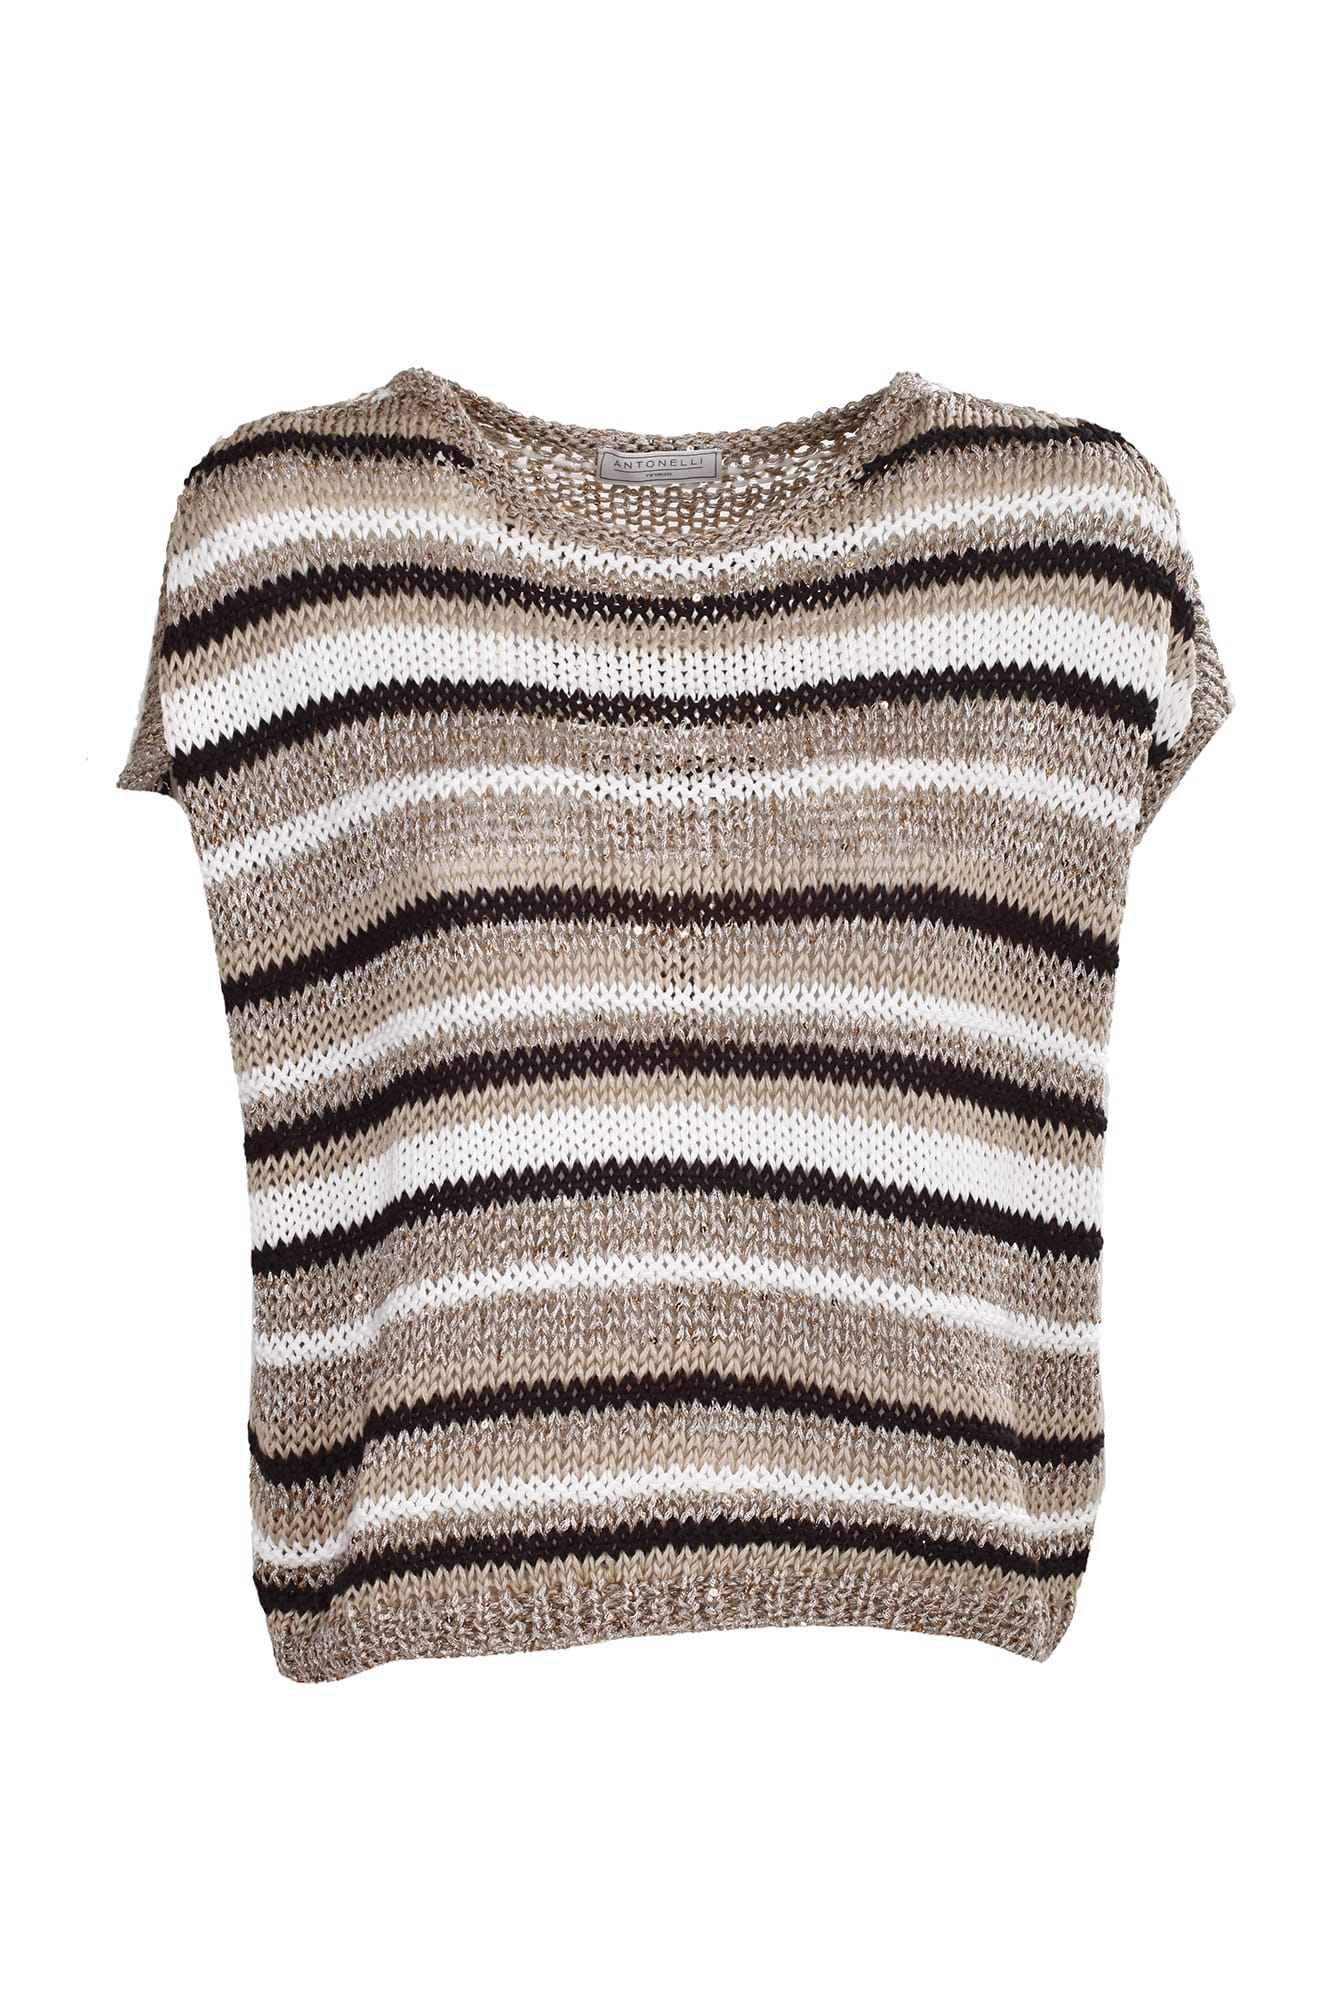 Antonelli cotton blend sweater